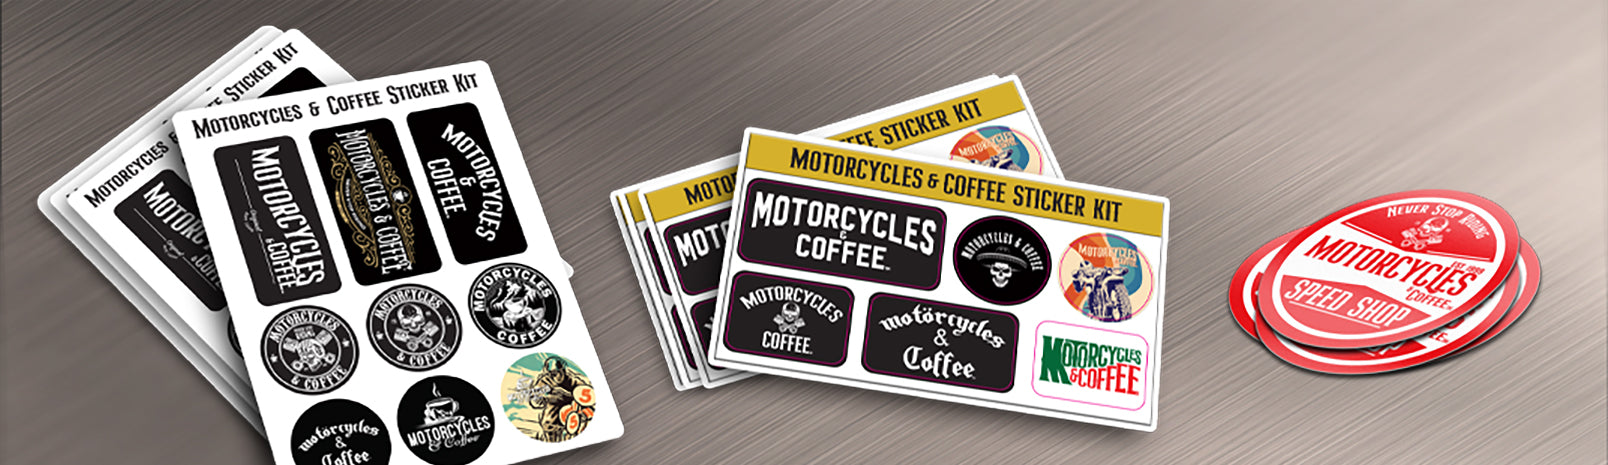 Motorcycles & Coffee - Premium Stickers